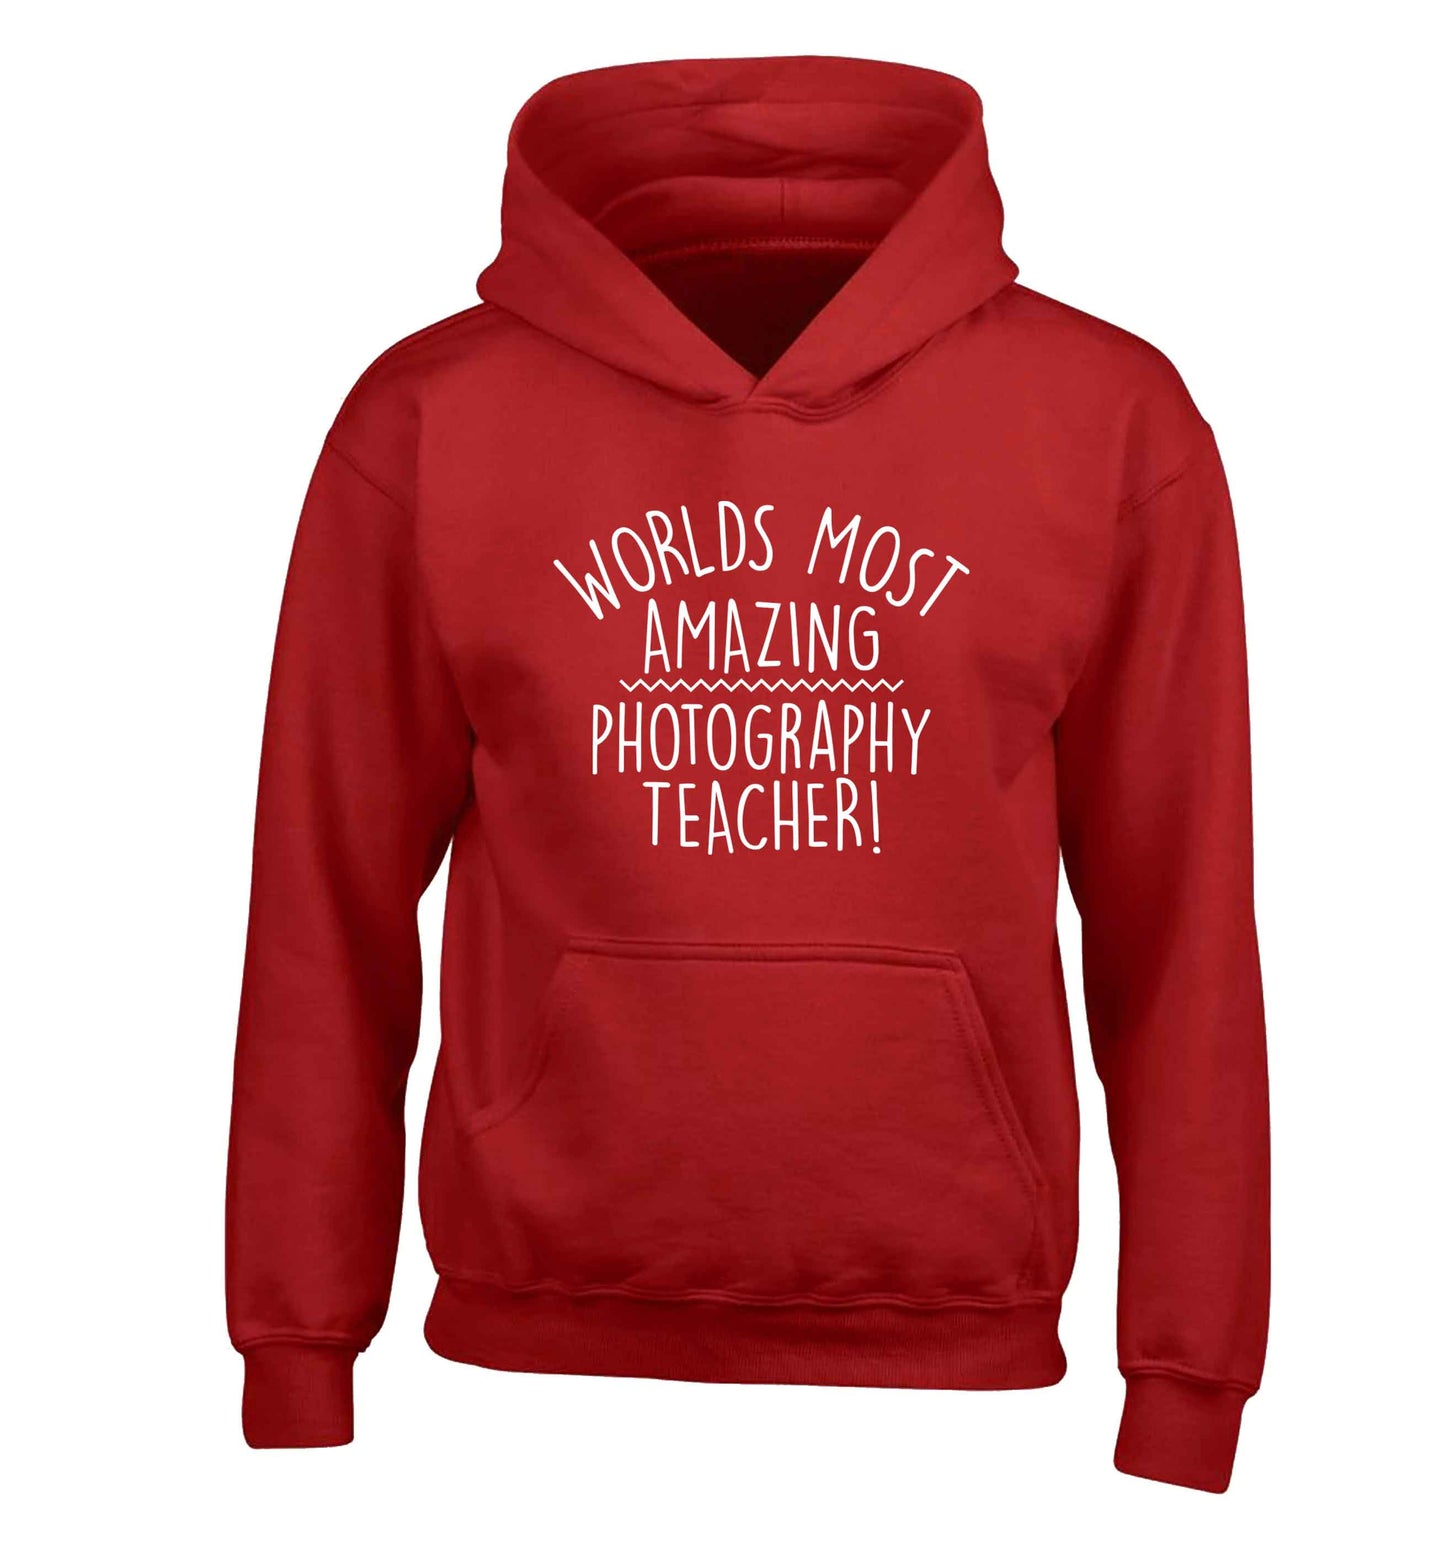 Worlds most amazing photography teacher children's red hoodie 12-13 Years